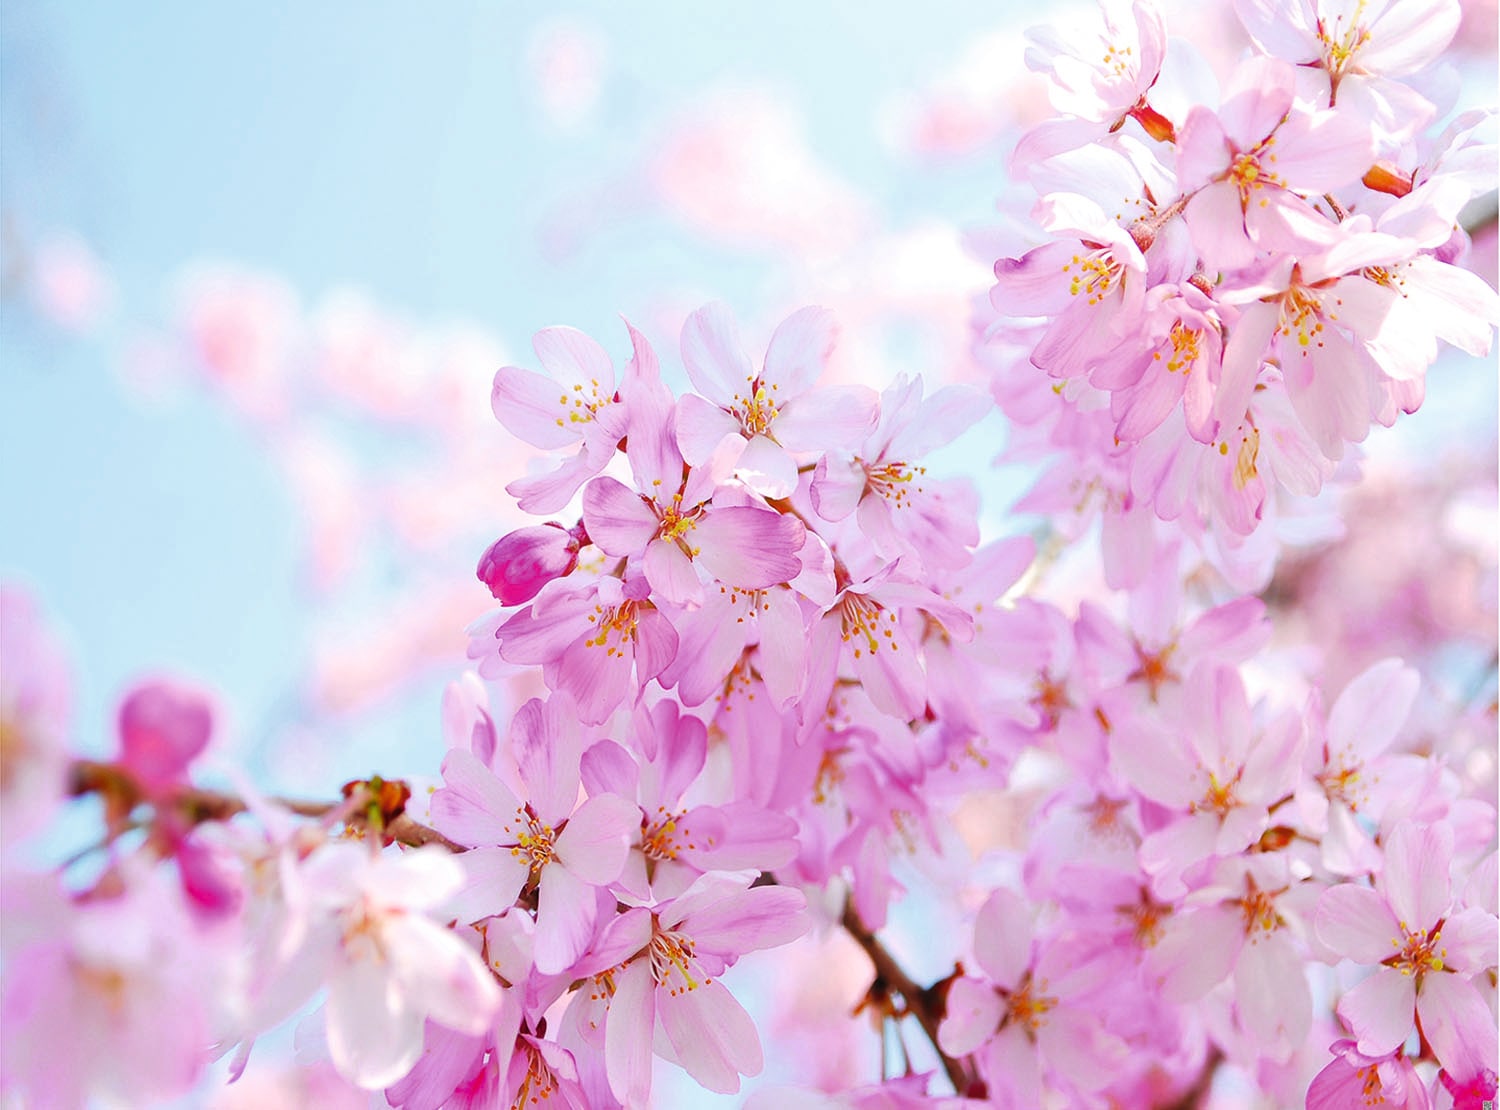 Papermoon Fototapete »Cherry Blossom« von Papermoon